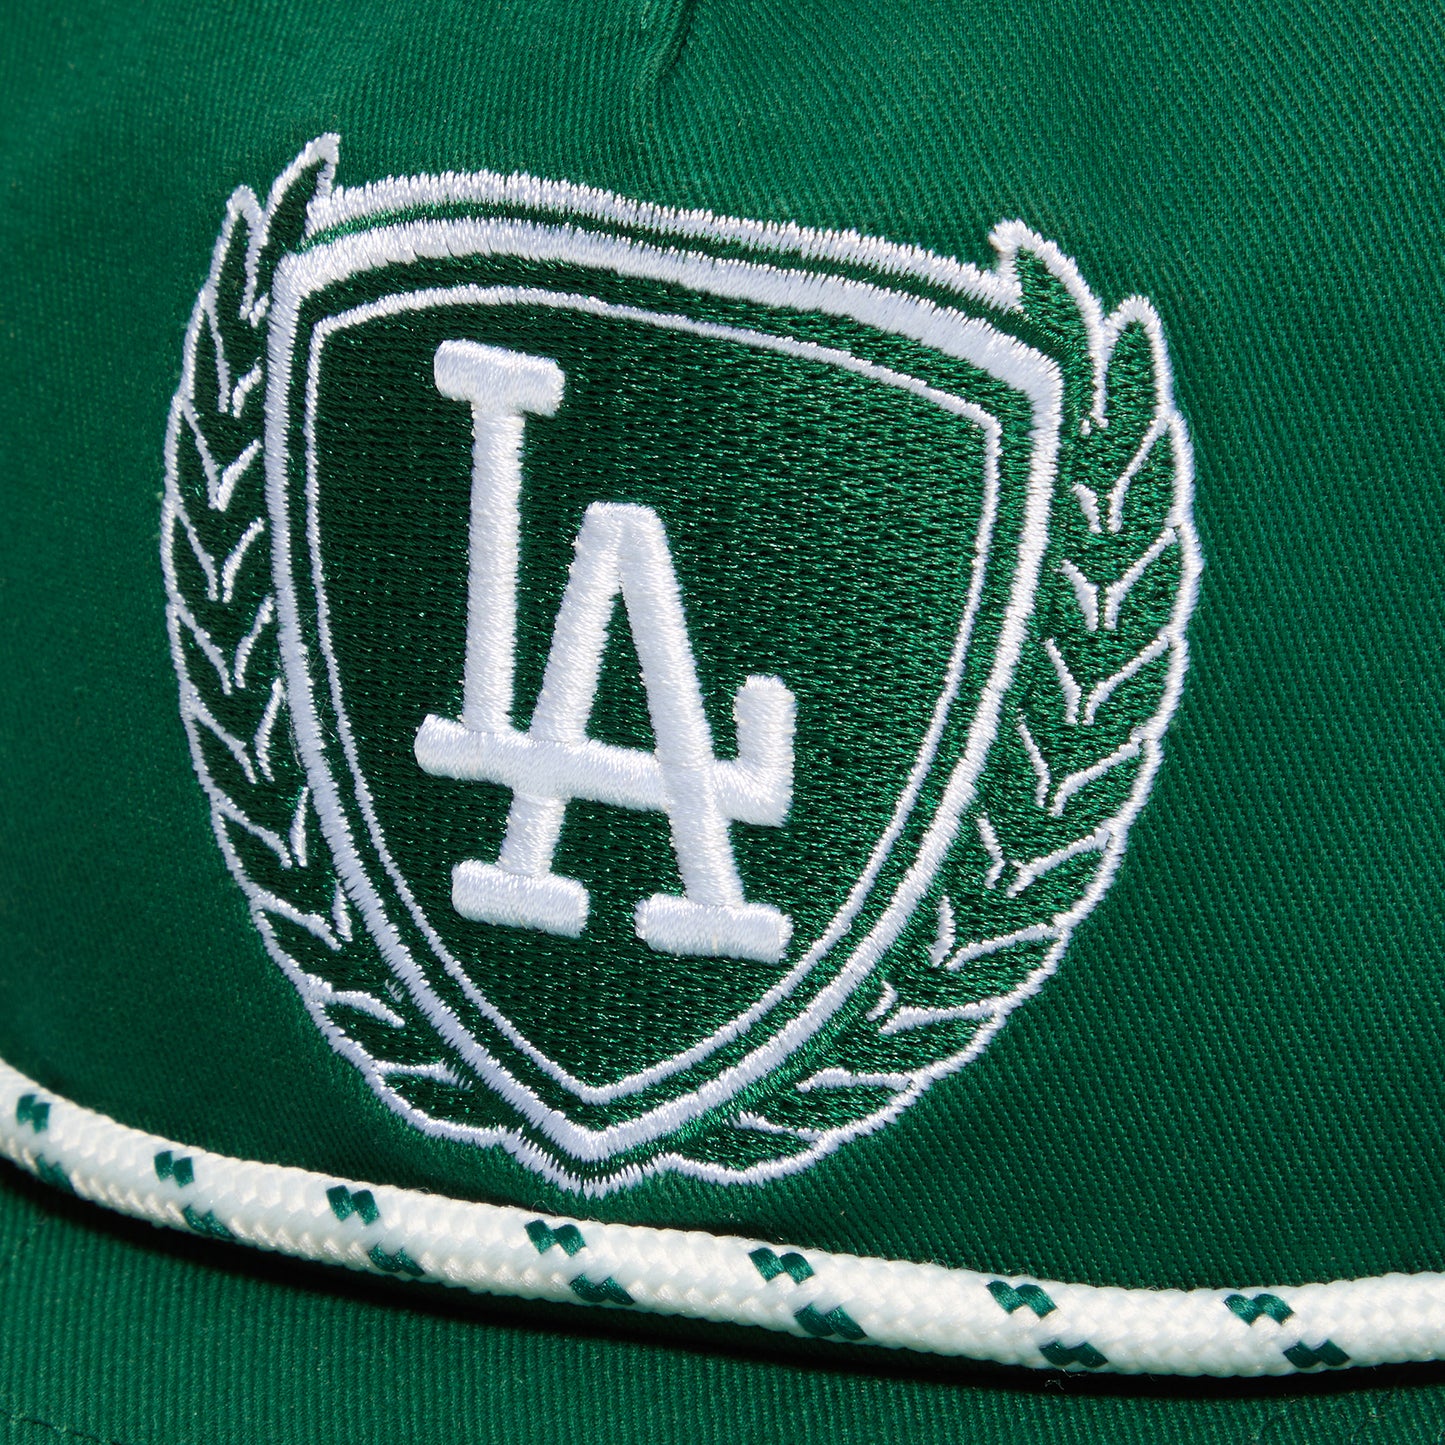 New Era Los Angeles Dodgers  Adjustable Hat (Green)